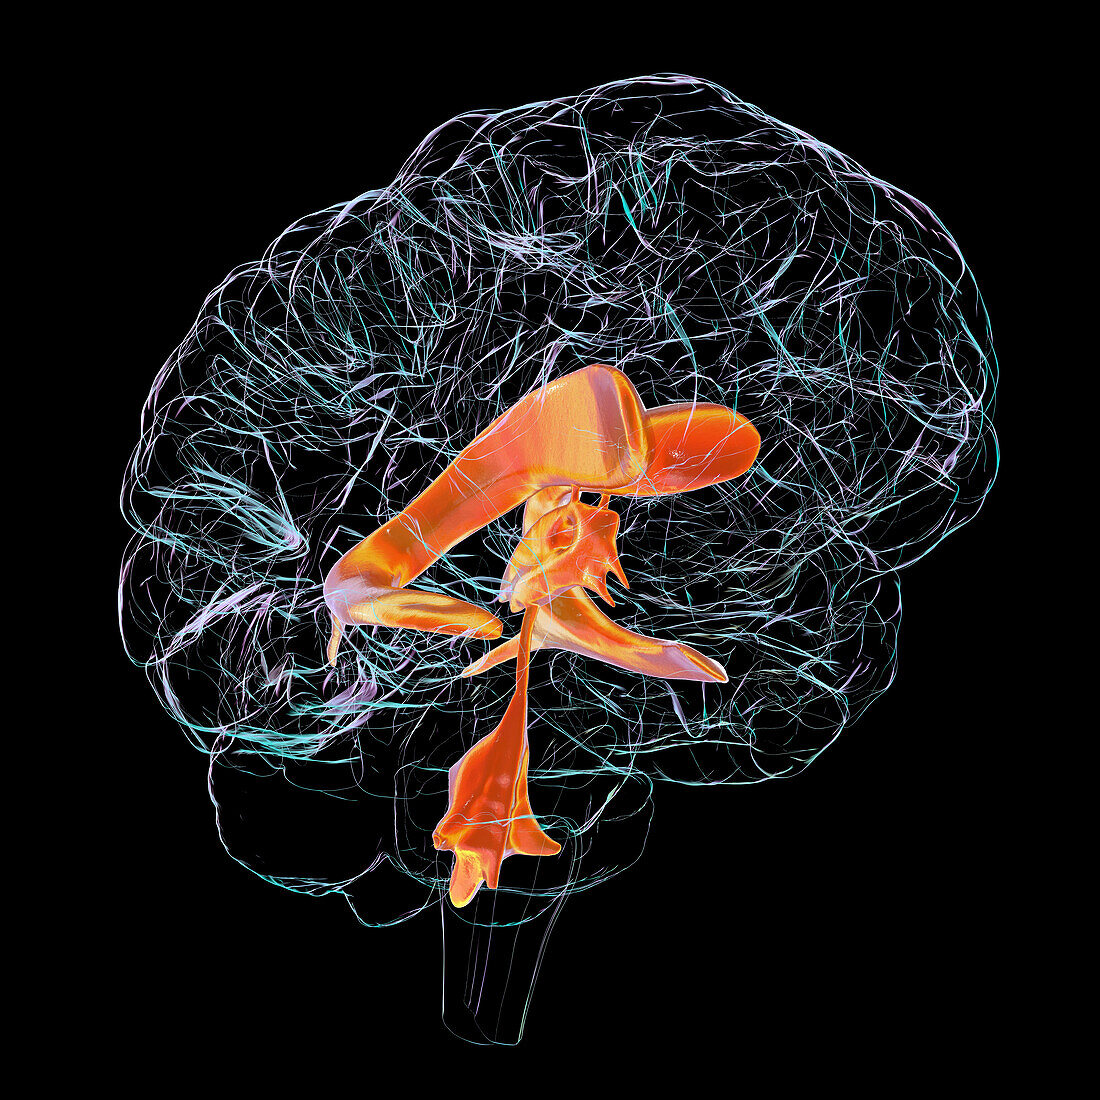 Ventricular system of the brain, illustration